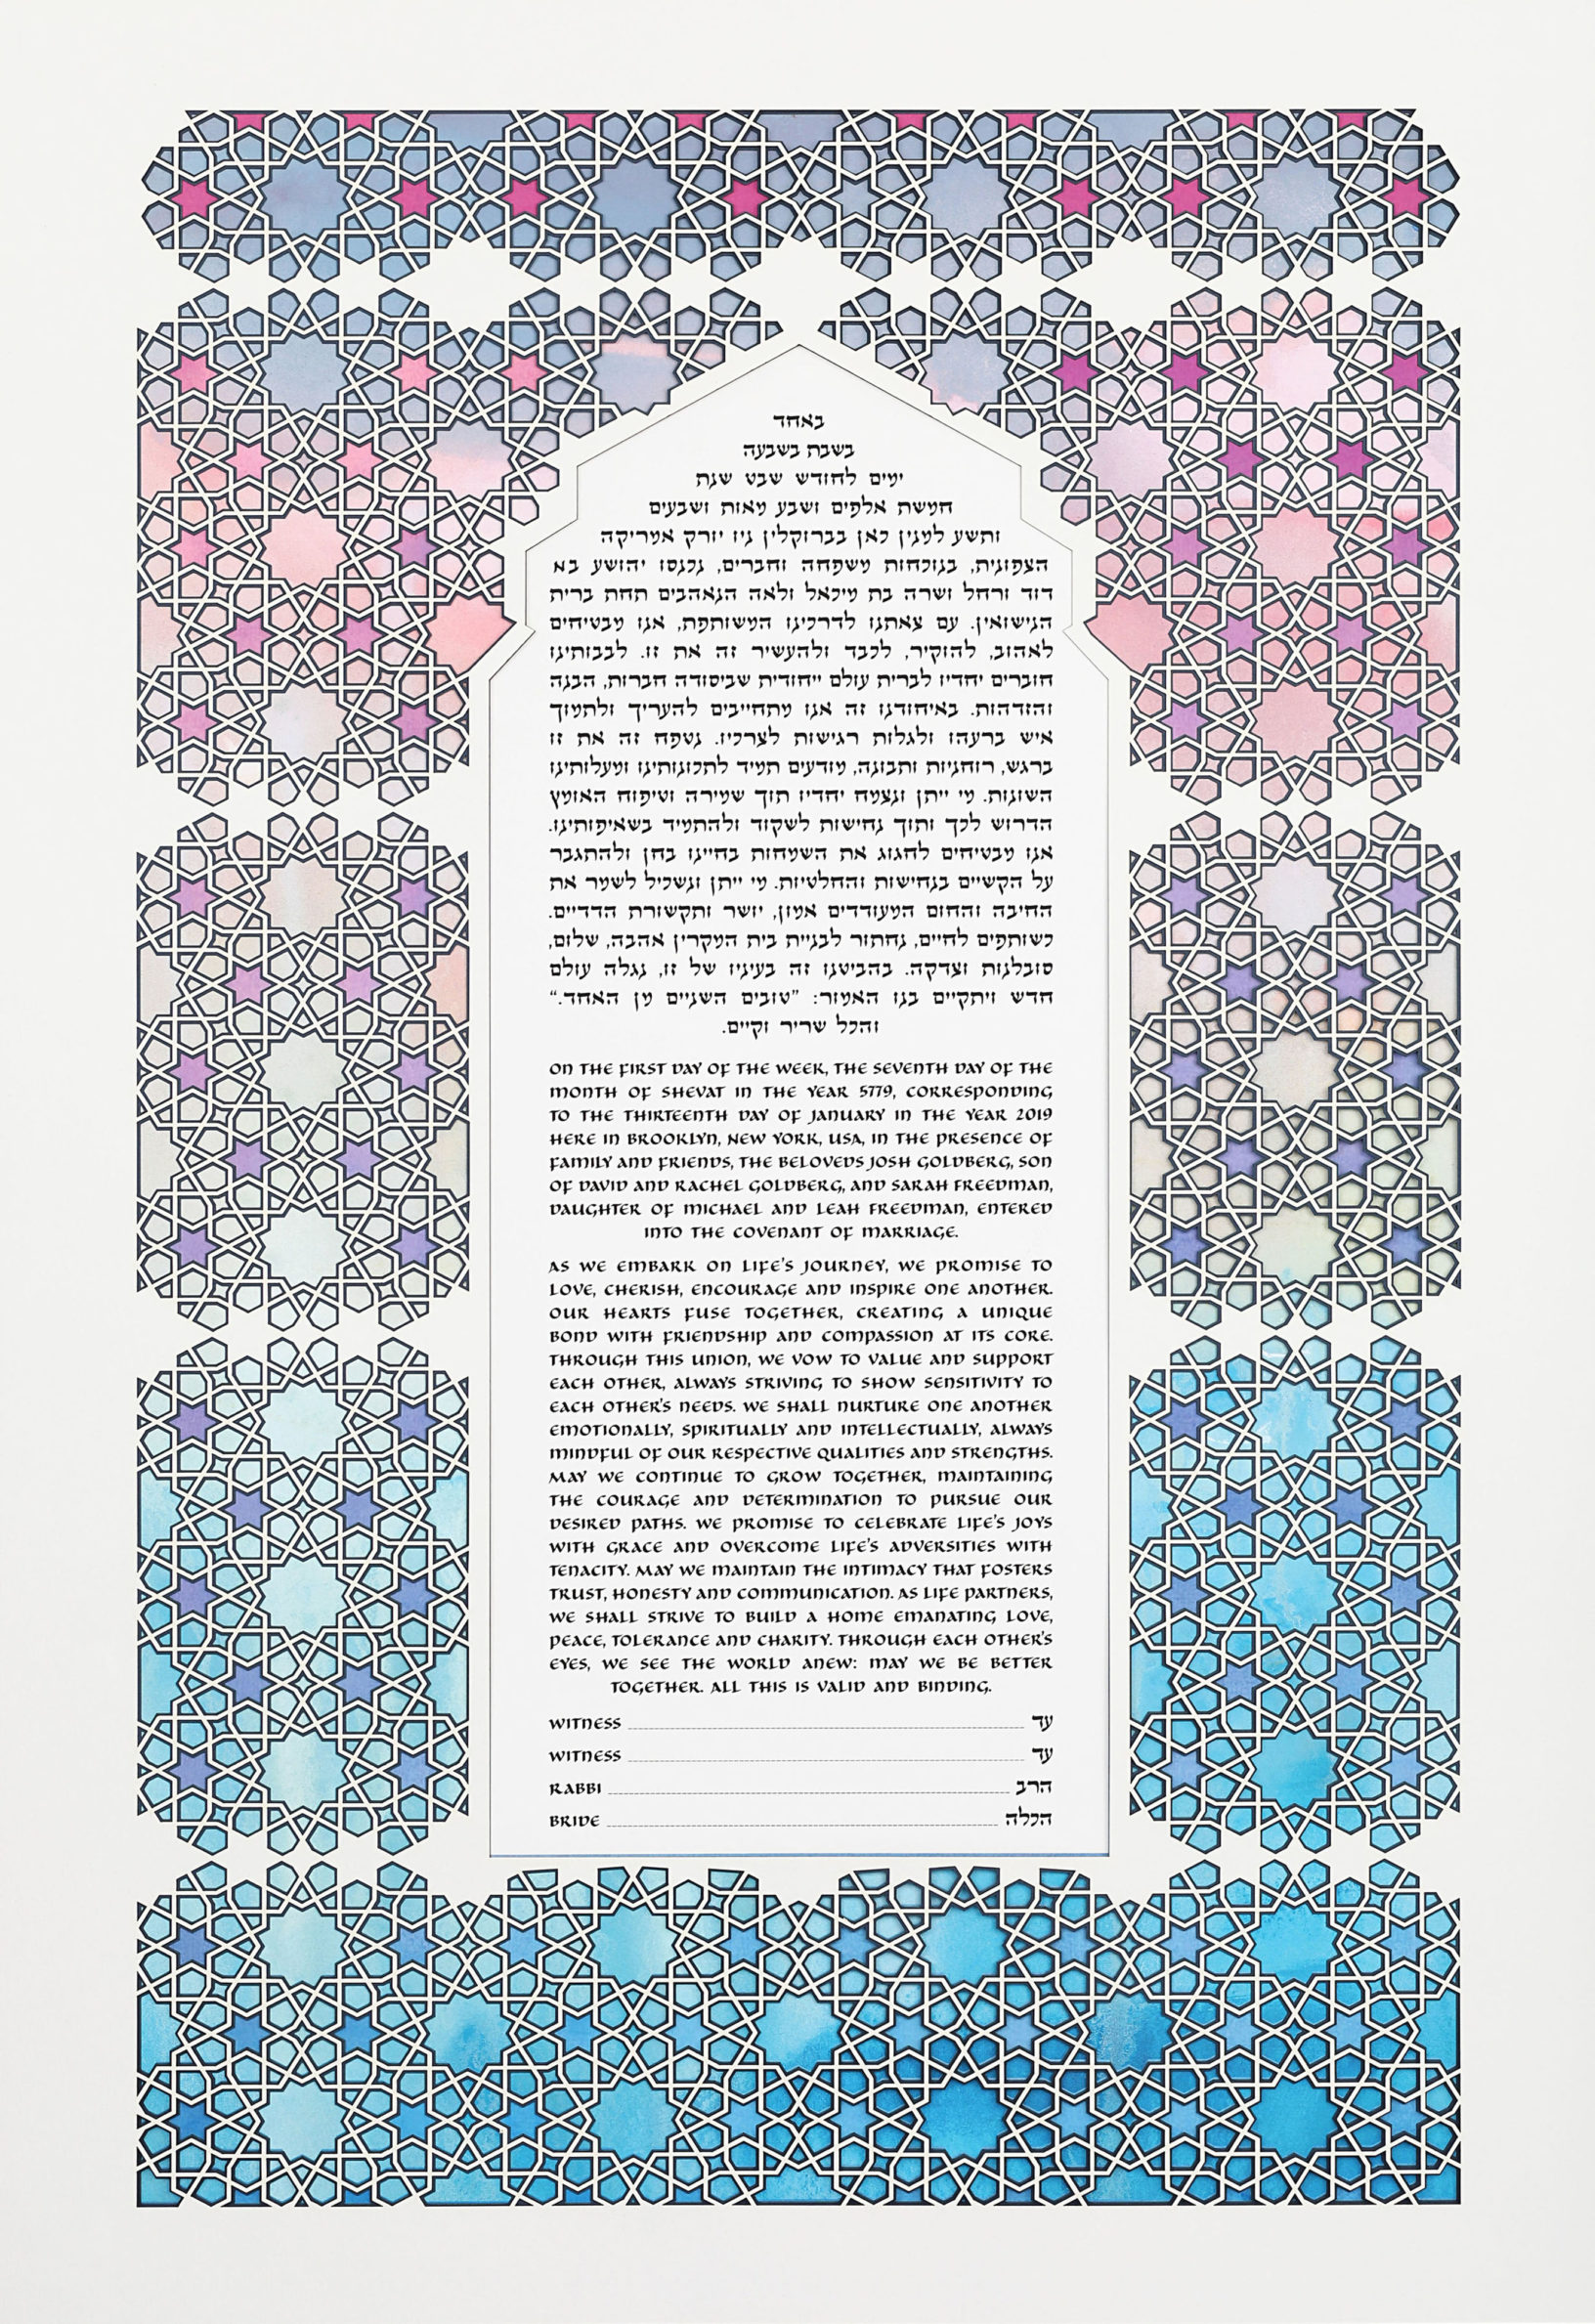 Ruth Becker Papercut Persian Multilayer Papercut Multi Ketubah Jewish Wedding Contract